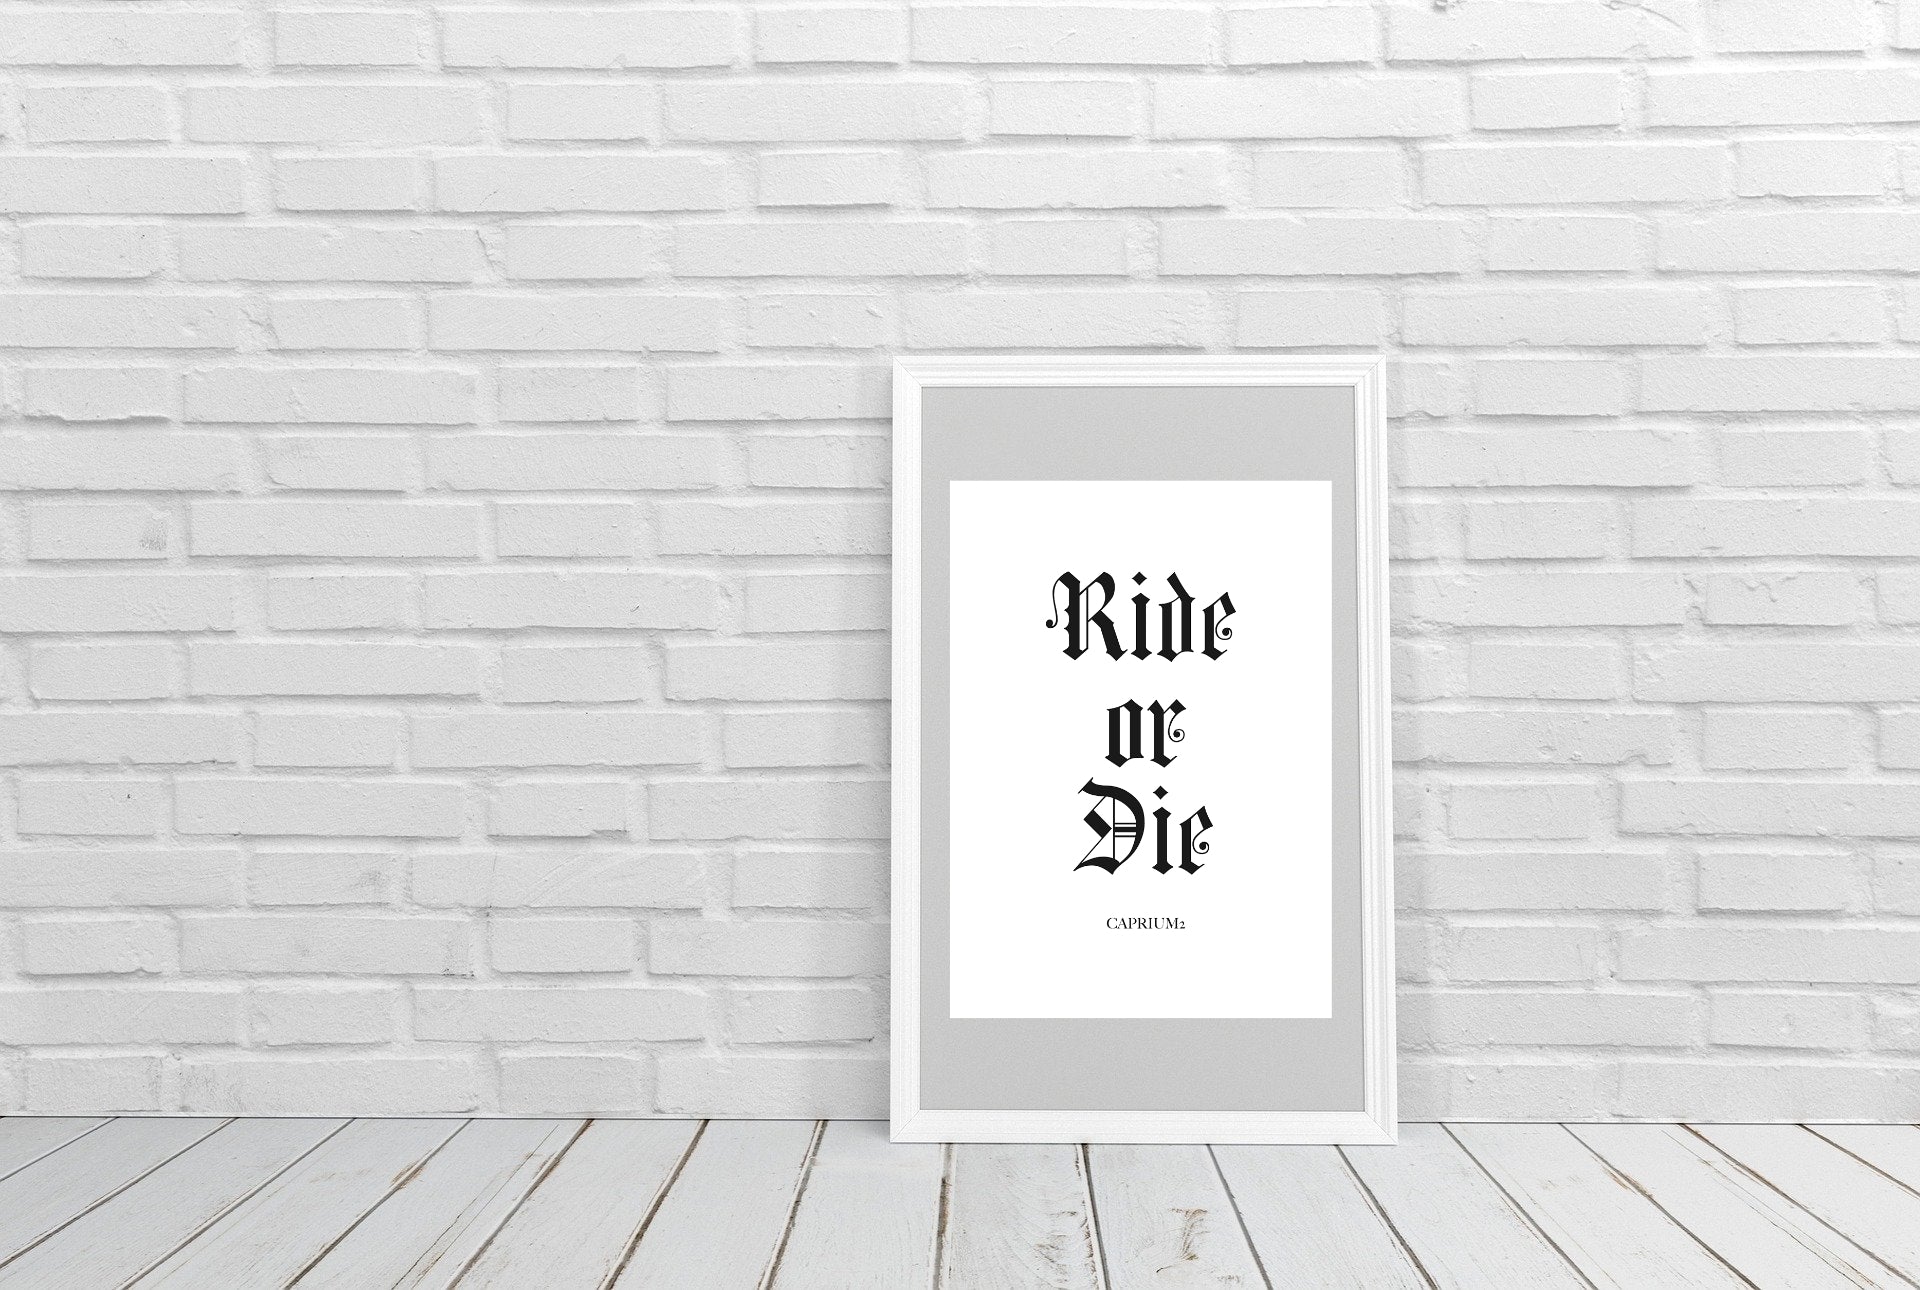 Ride or Die Poster XL - Poster Din A2 (hoch) - CAPRIUM